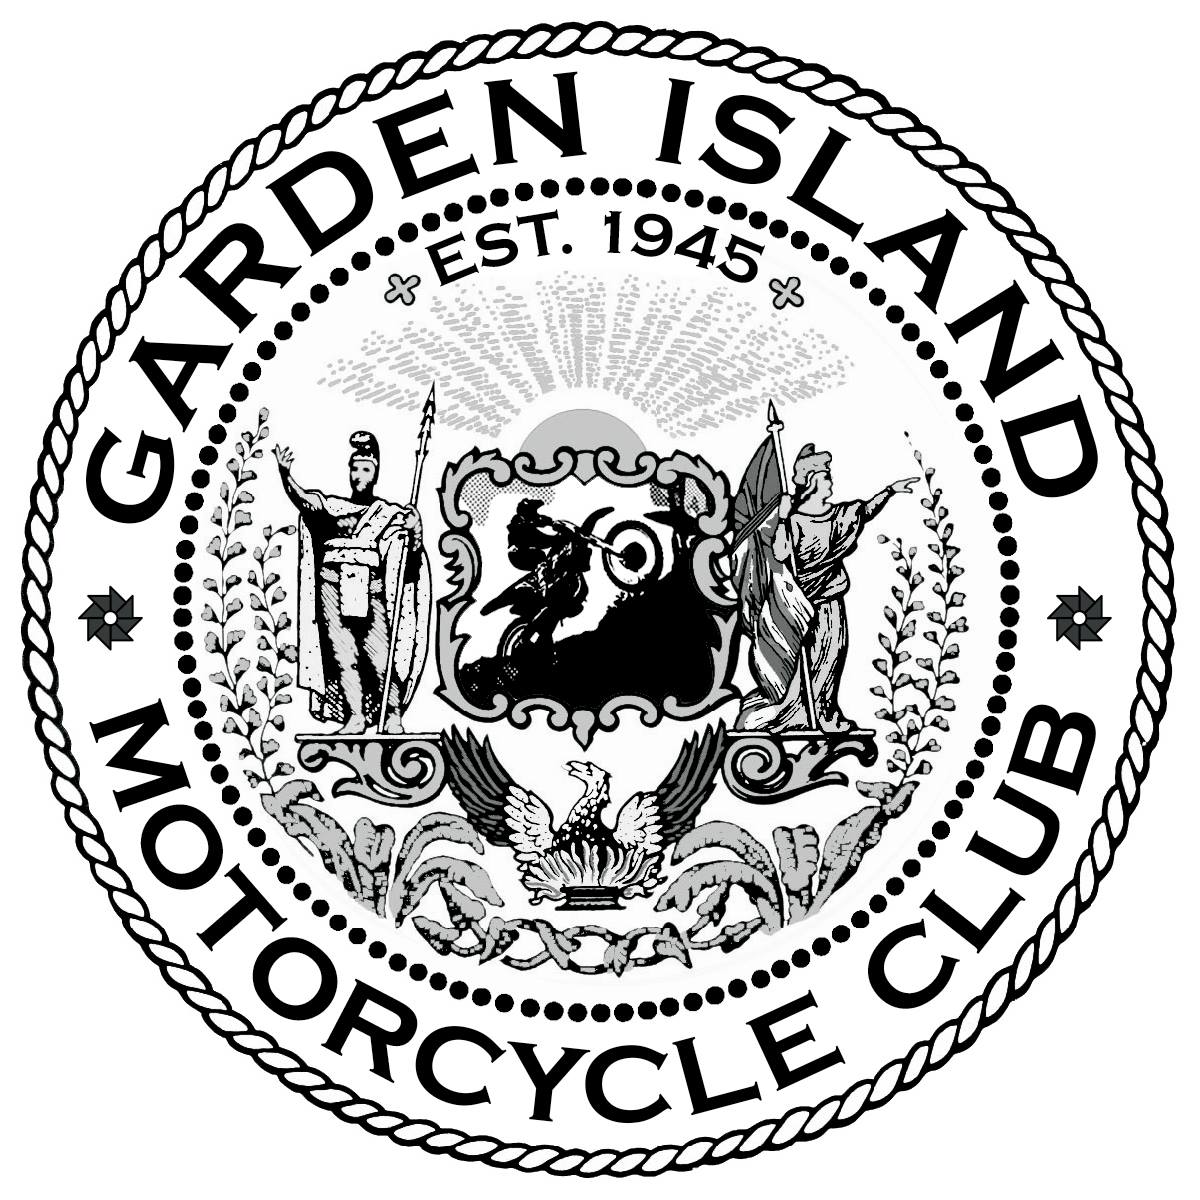 Garden Island Motorcycle Club